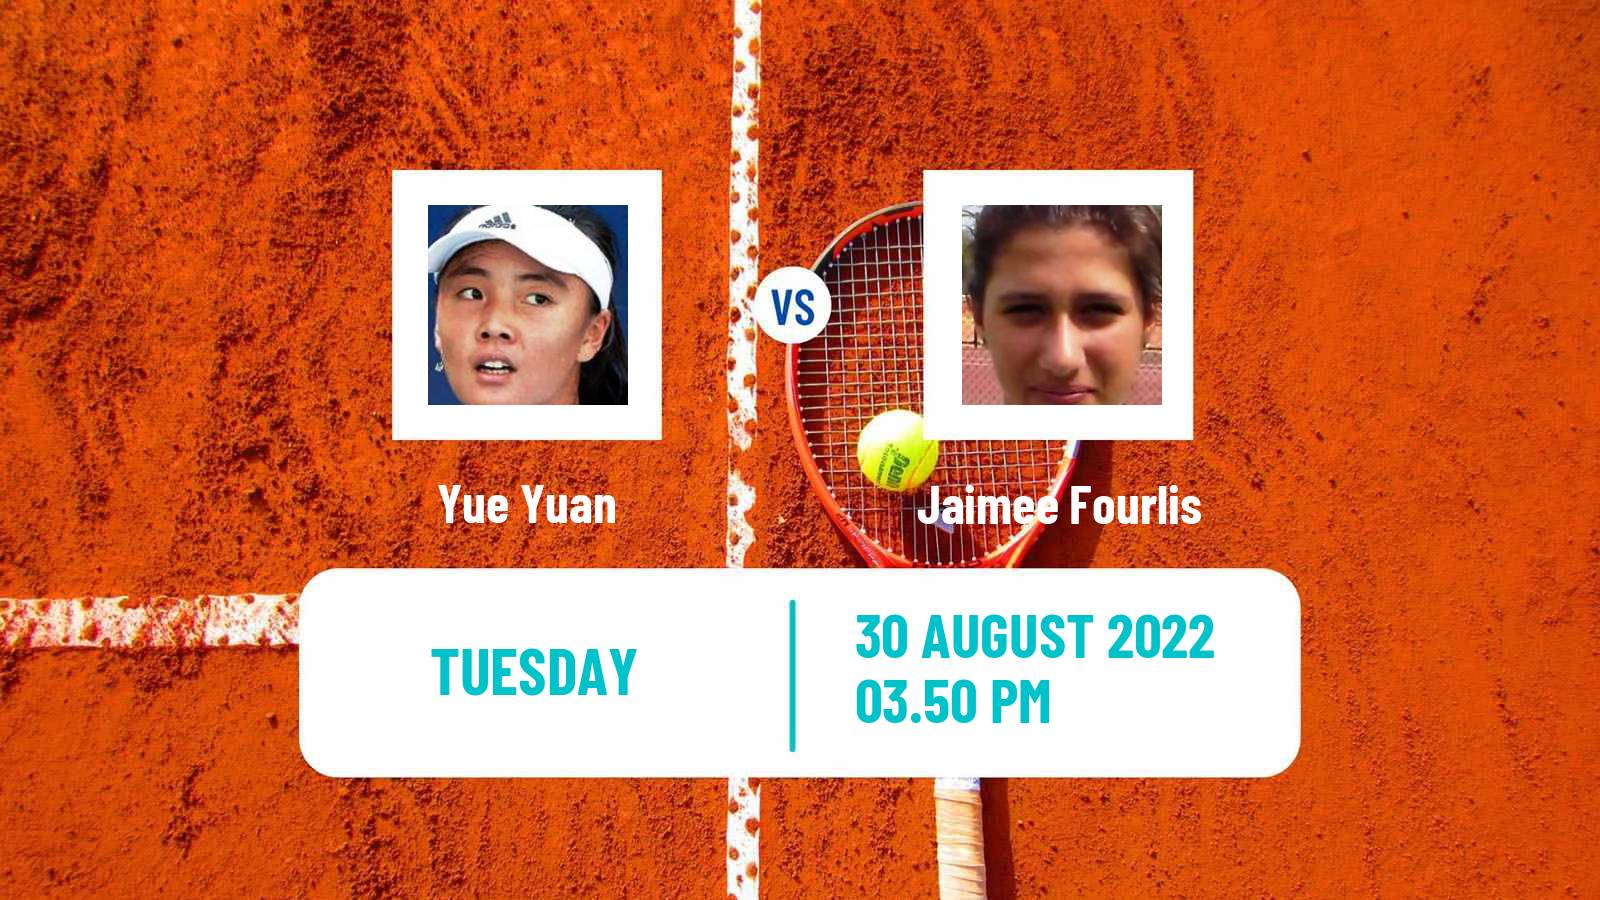 Tennis WTA US Open Yue Yuan - Jaimee Fourlis